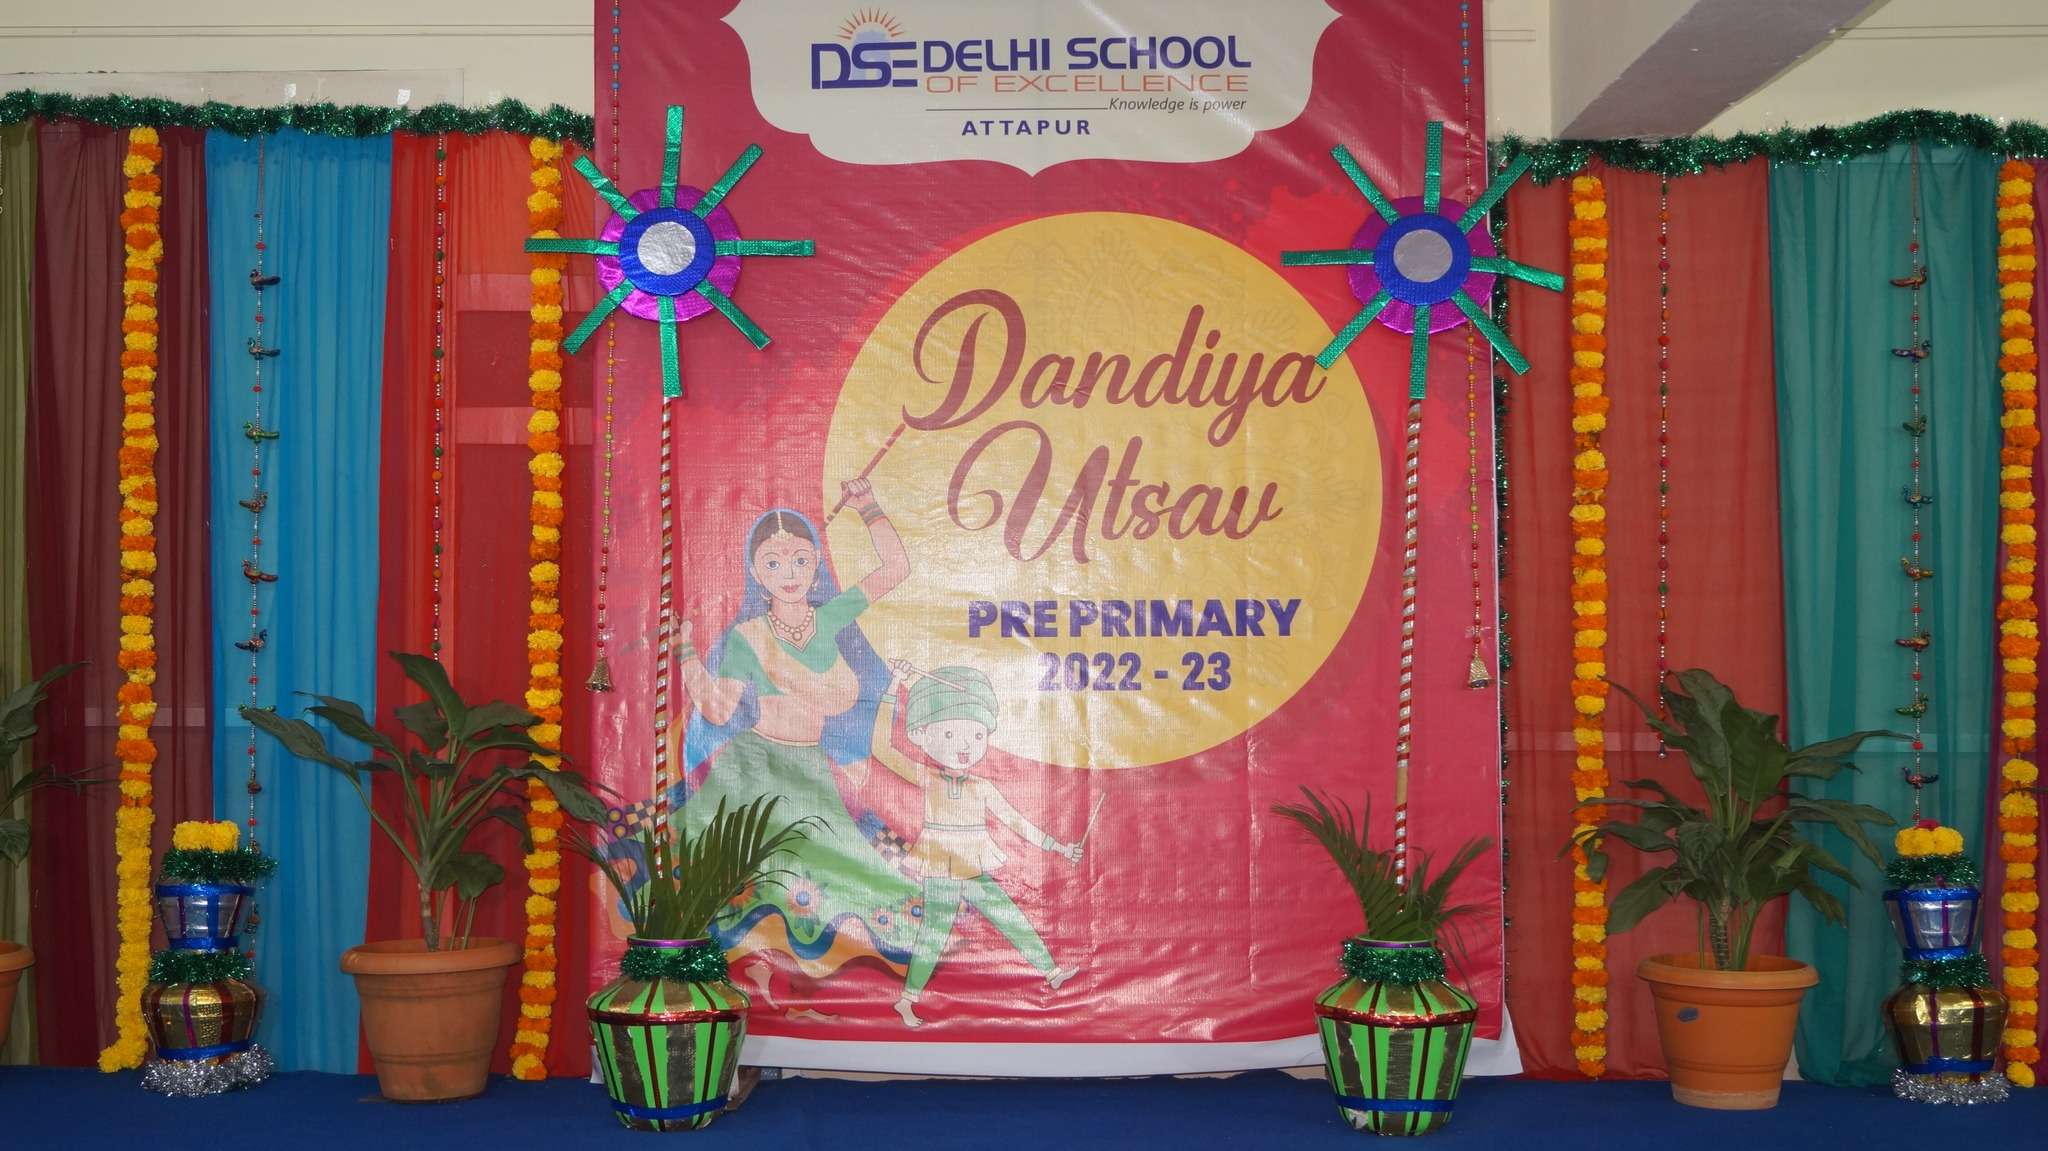 Dandiya Utsav